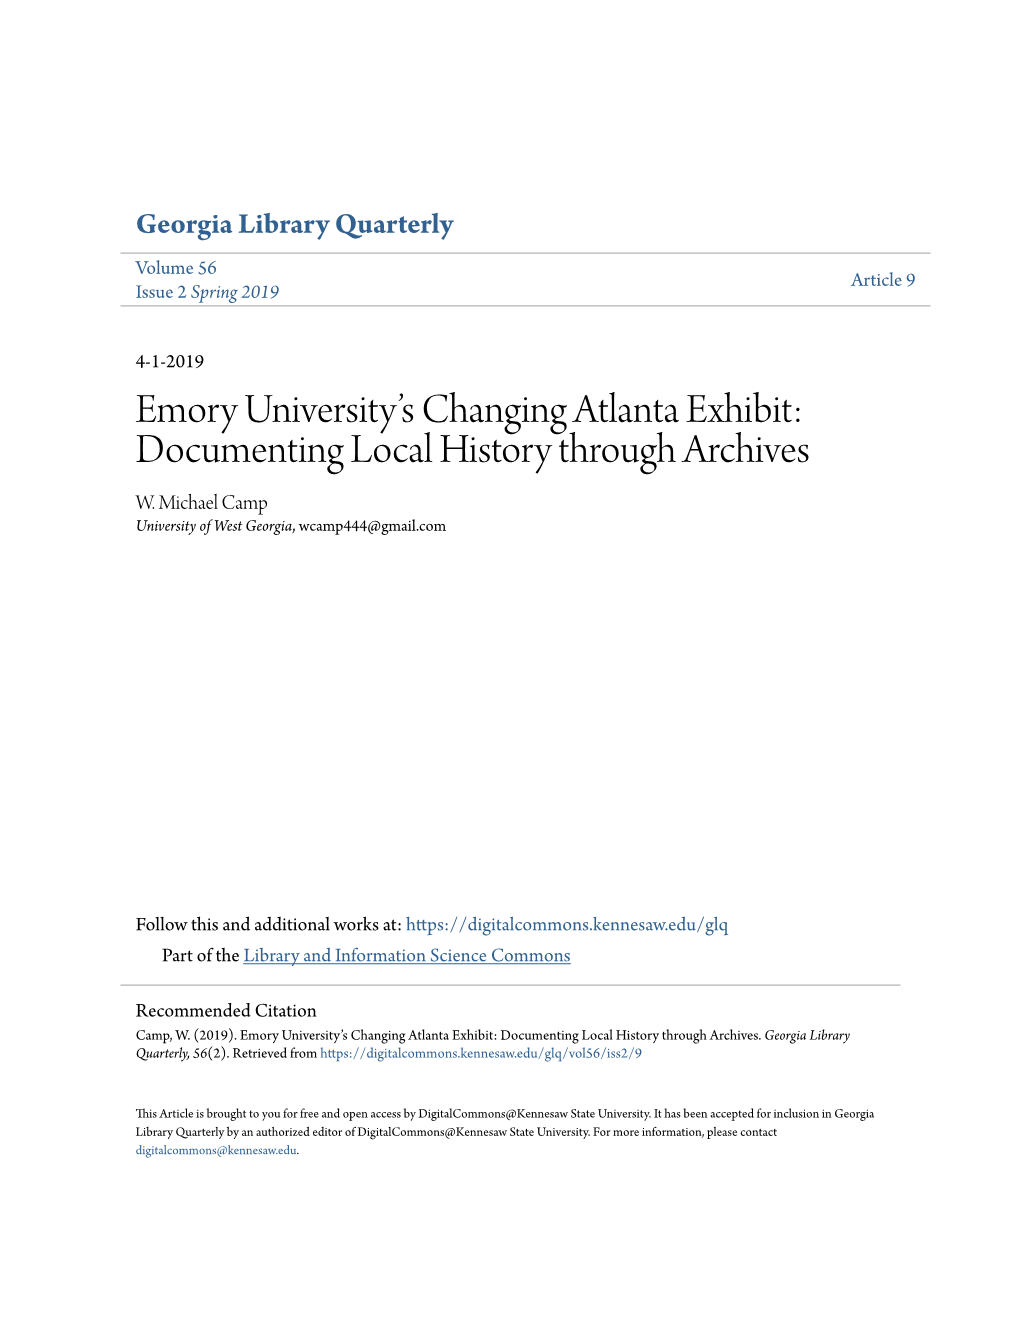 Emory University's Changing Atlanta Exhibit: Documenting Local History